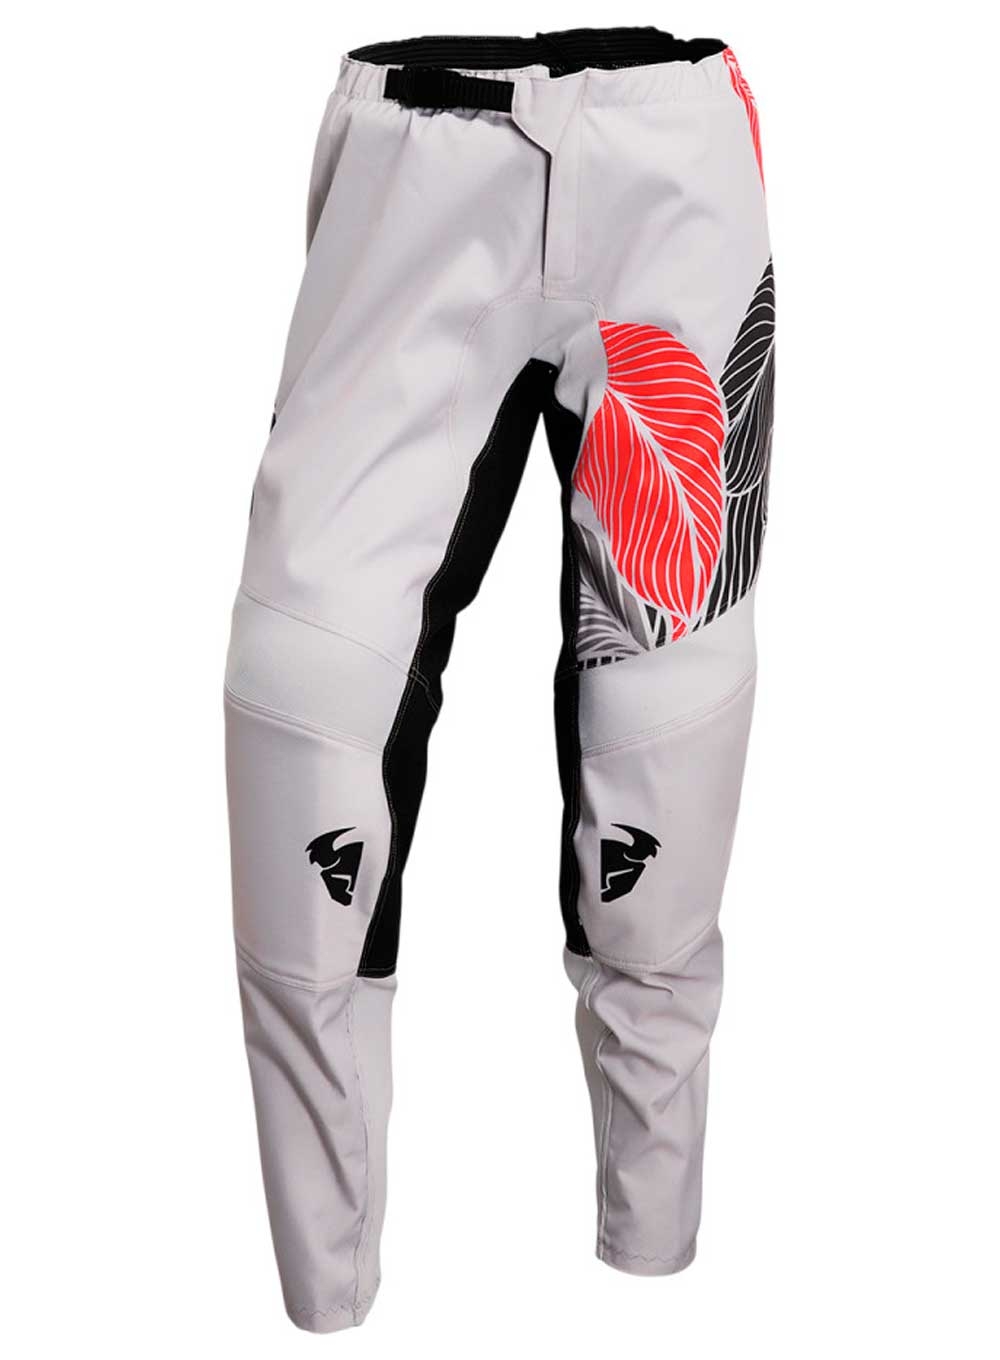 Buy online : Ortovox merino light short pants women - hot coral - Sportmania